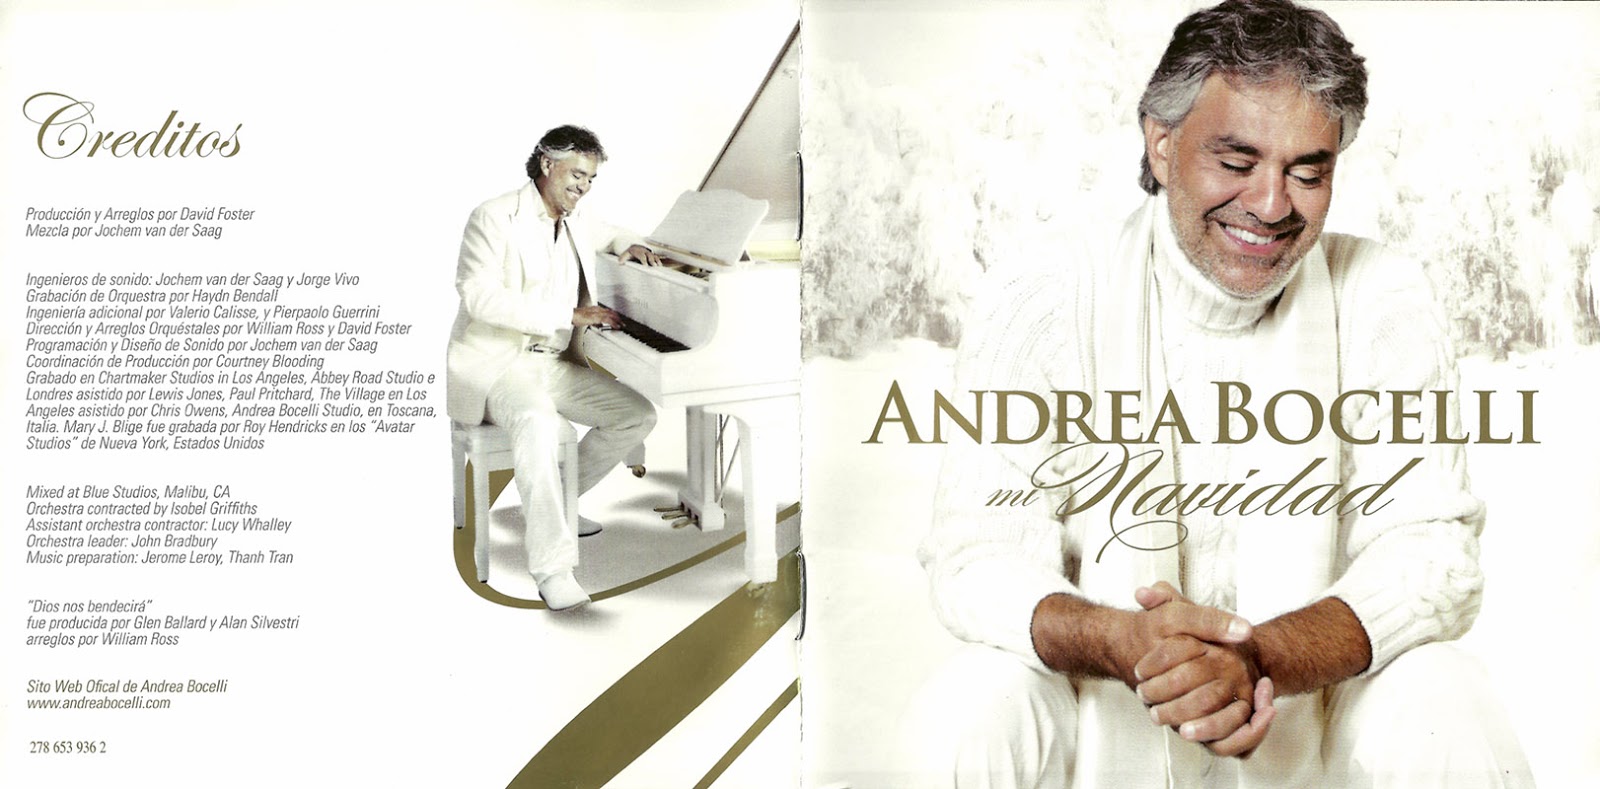 Andrea bocelli vivo. Bocelli Andrea "my Christmas". Андреа Бочелли инвалид. Andrea Bocelli - my Christmas (2009). Андреа Бочелли в 1998 году.